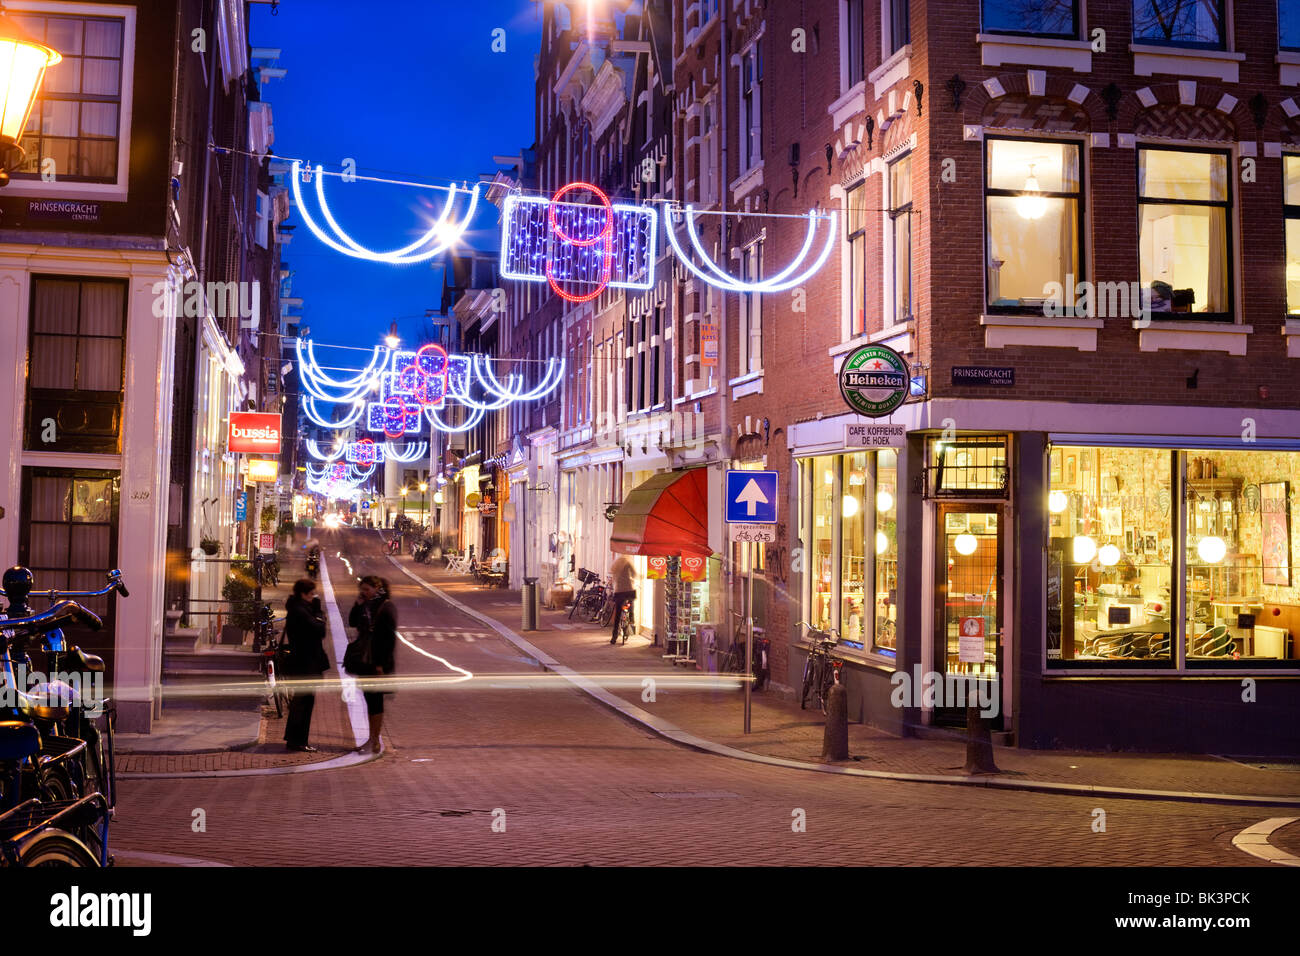 De Negen Straatjes - The Nine 9 Little Streets shopping district in Amsterdam, The Netherlands, Holland. At dusk. Stock Photo